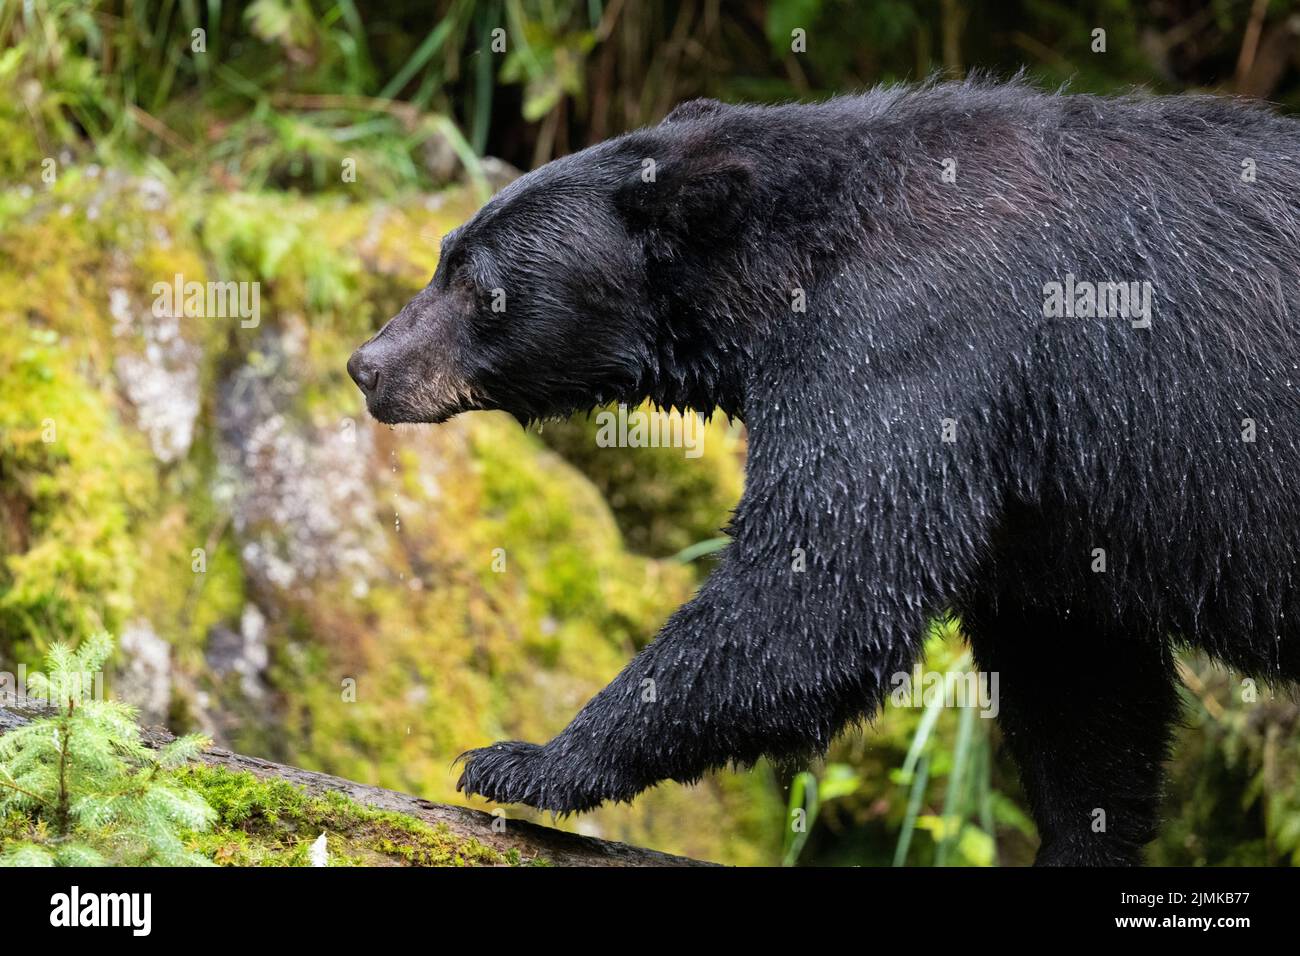 Alaska, Tongass National Forest, Anan Creek. American black bear (WILD: Ursus americanus) in wilderness forest habitat. Stock Photo